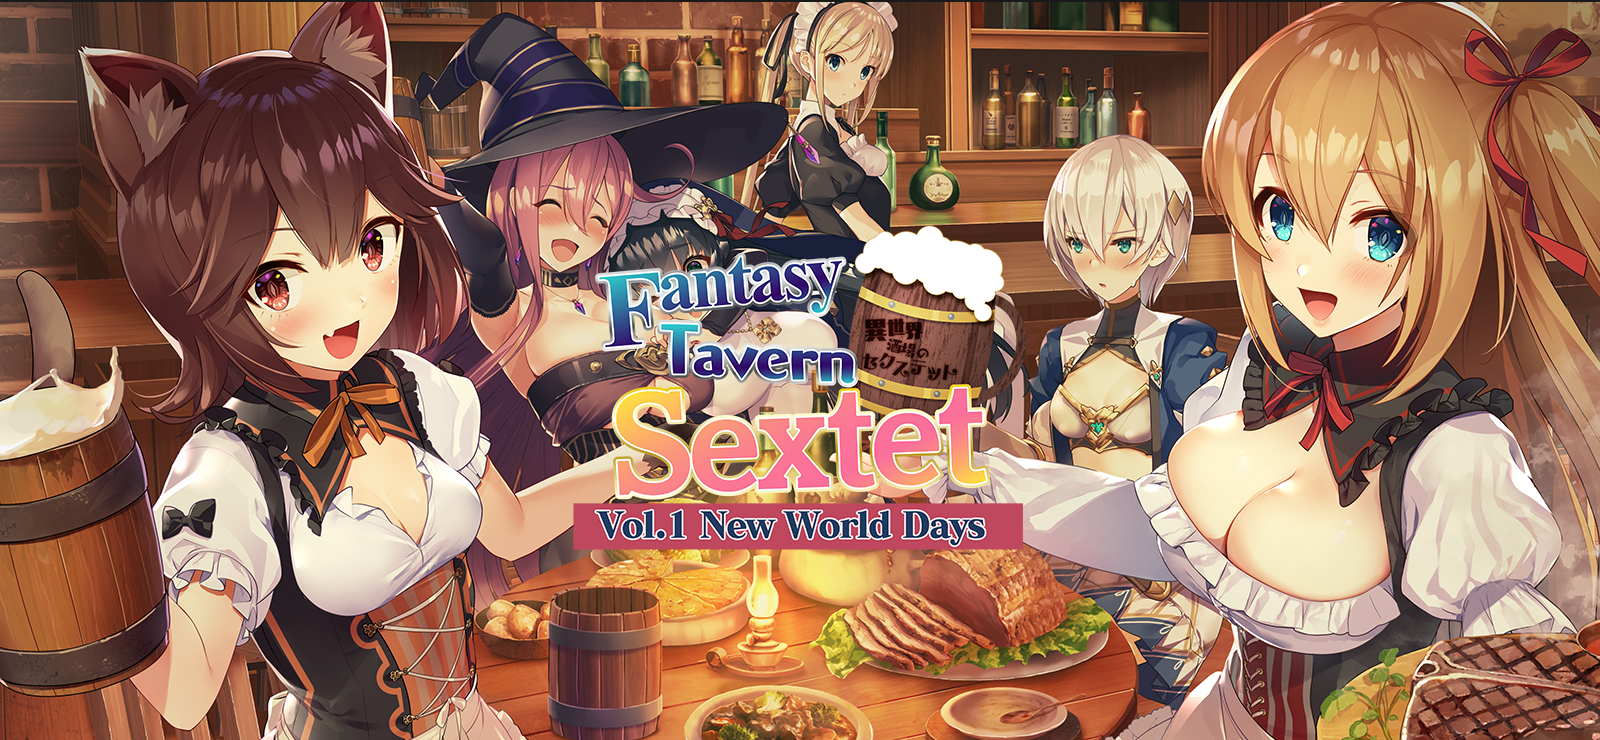 Fantasy Tavern Sextet - Vol.1 New World Days